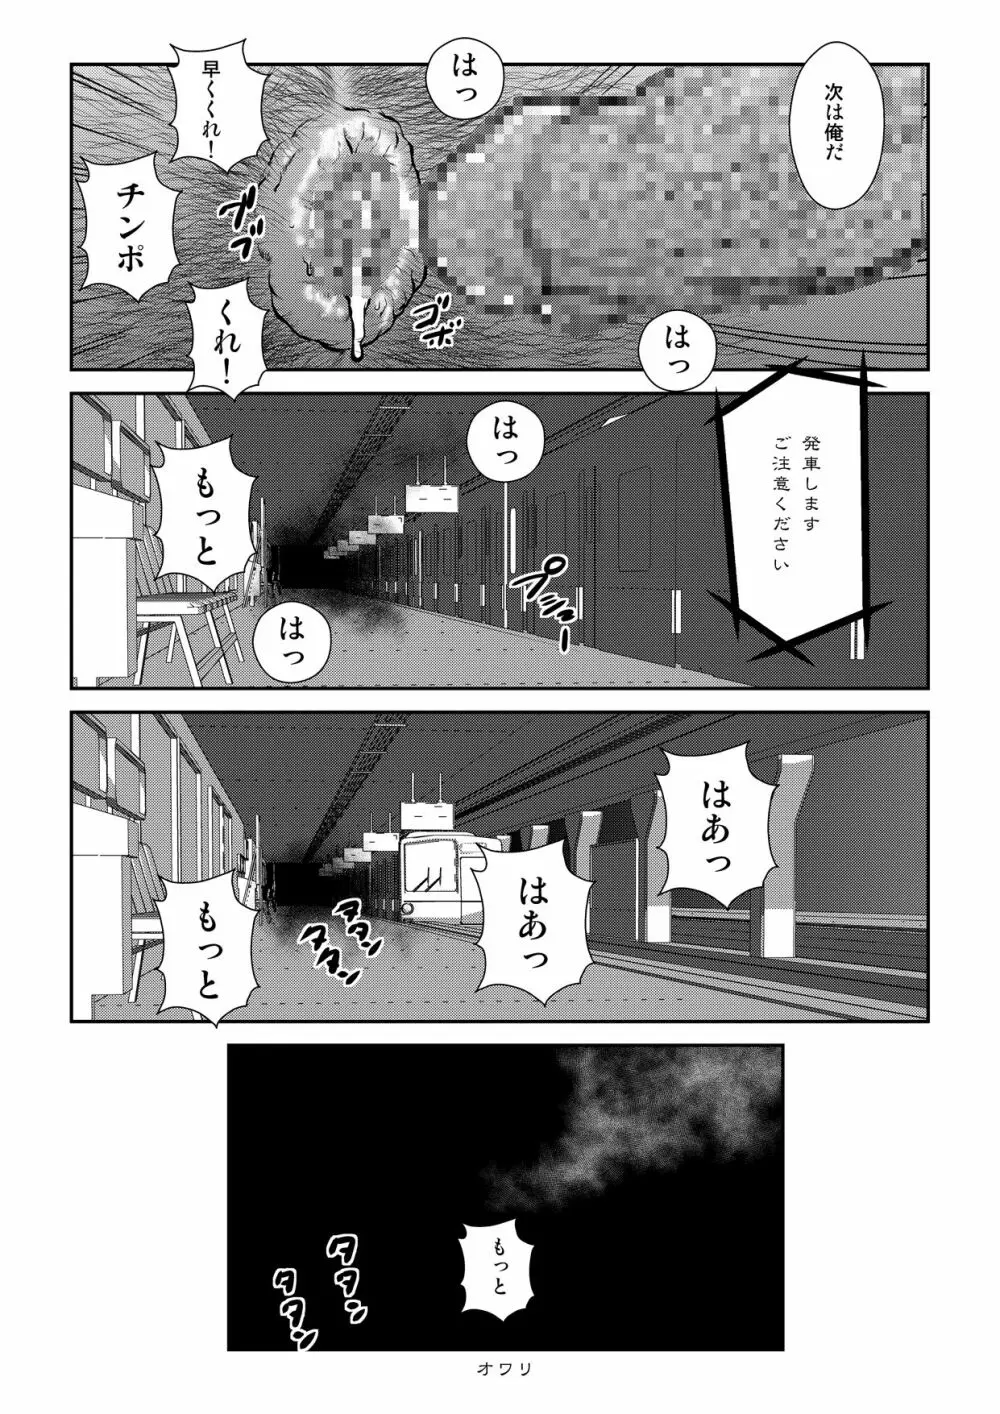 穴場2〜地下鉄〜 16ページ